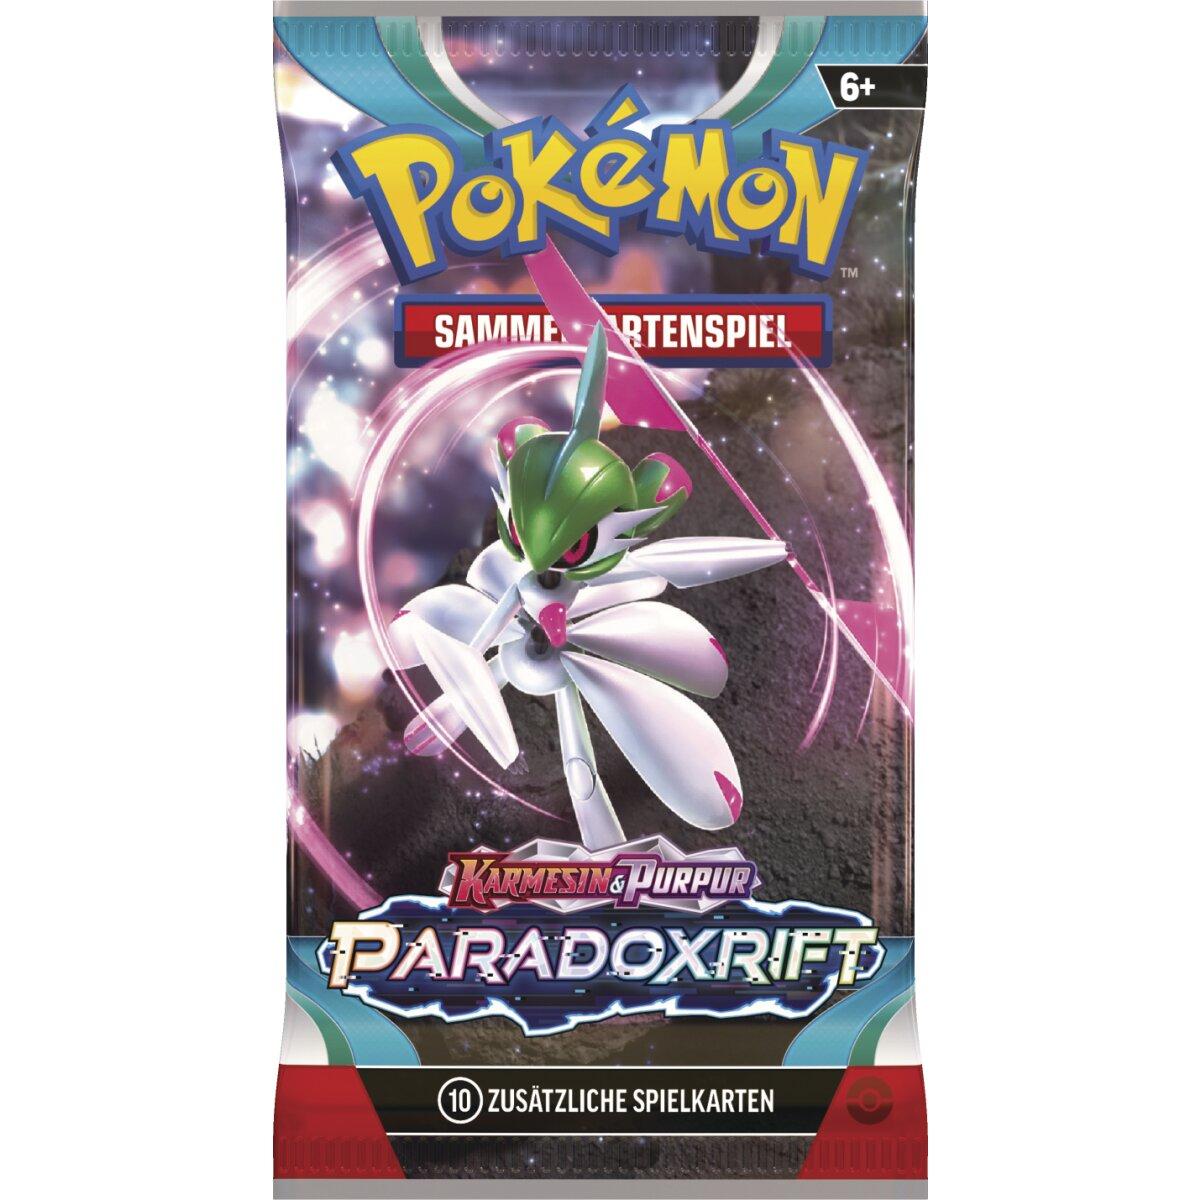  Pokémon - Booster: Karmesin & Purpur, Paradoxrift